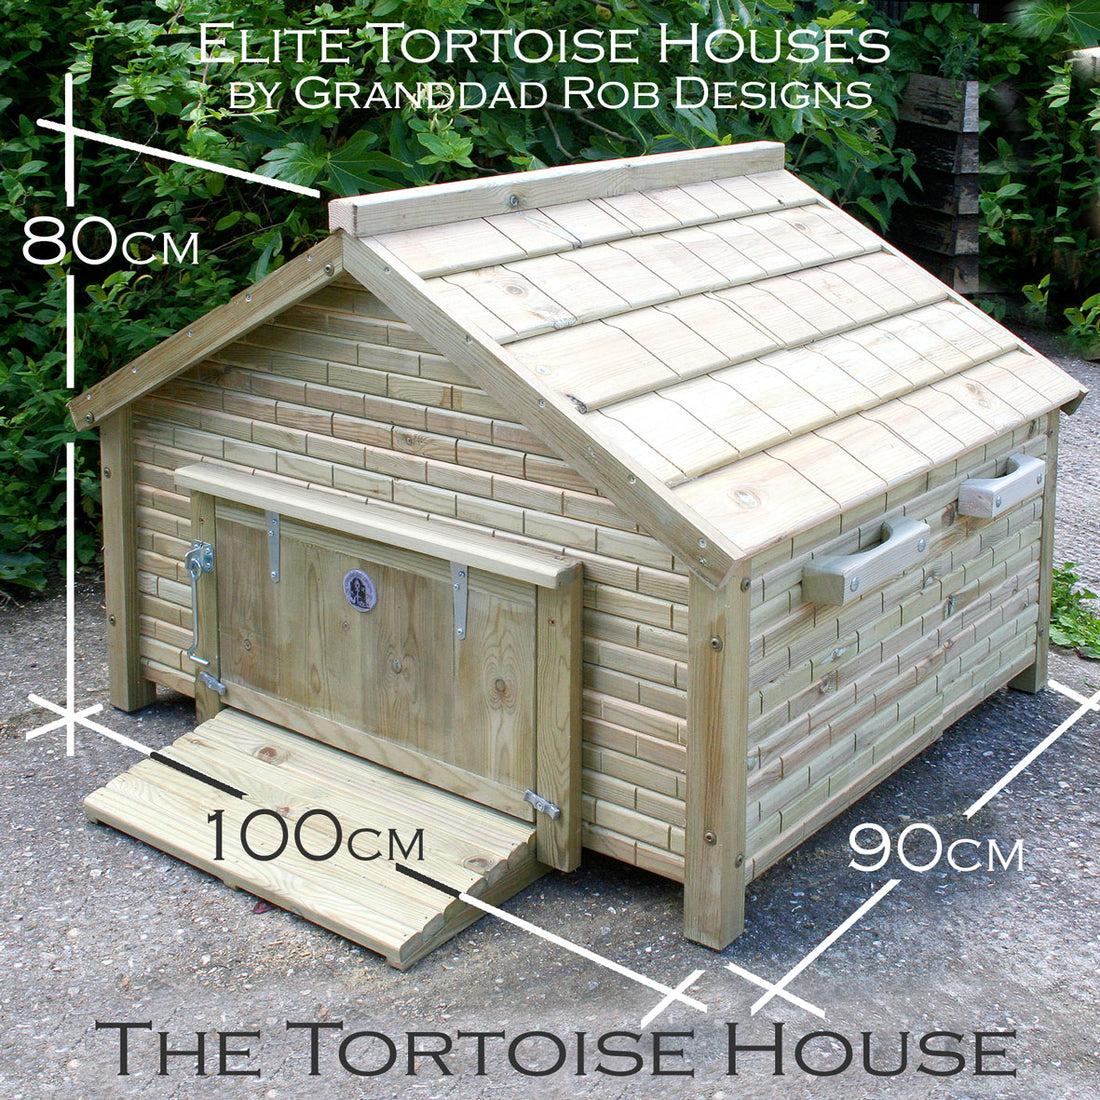 Tortoise House